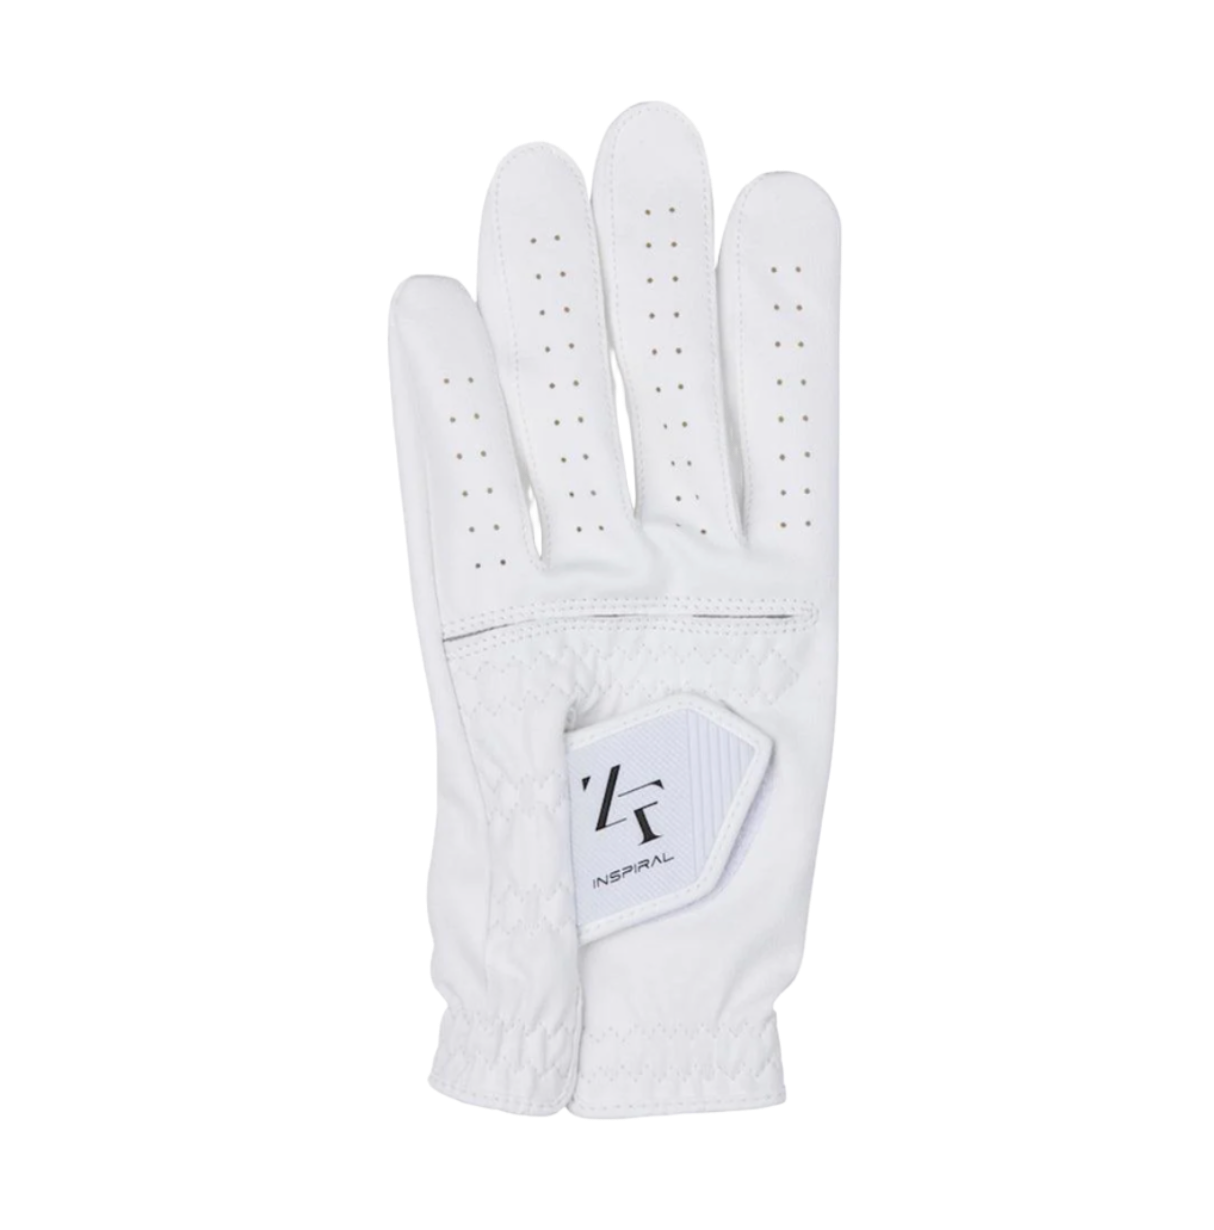 Inspiral Golf Glove - buy 3 for £30